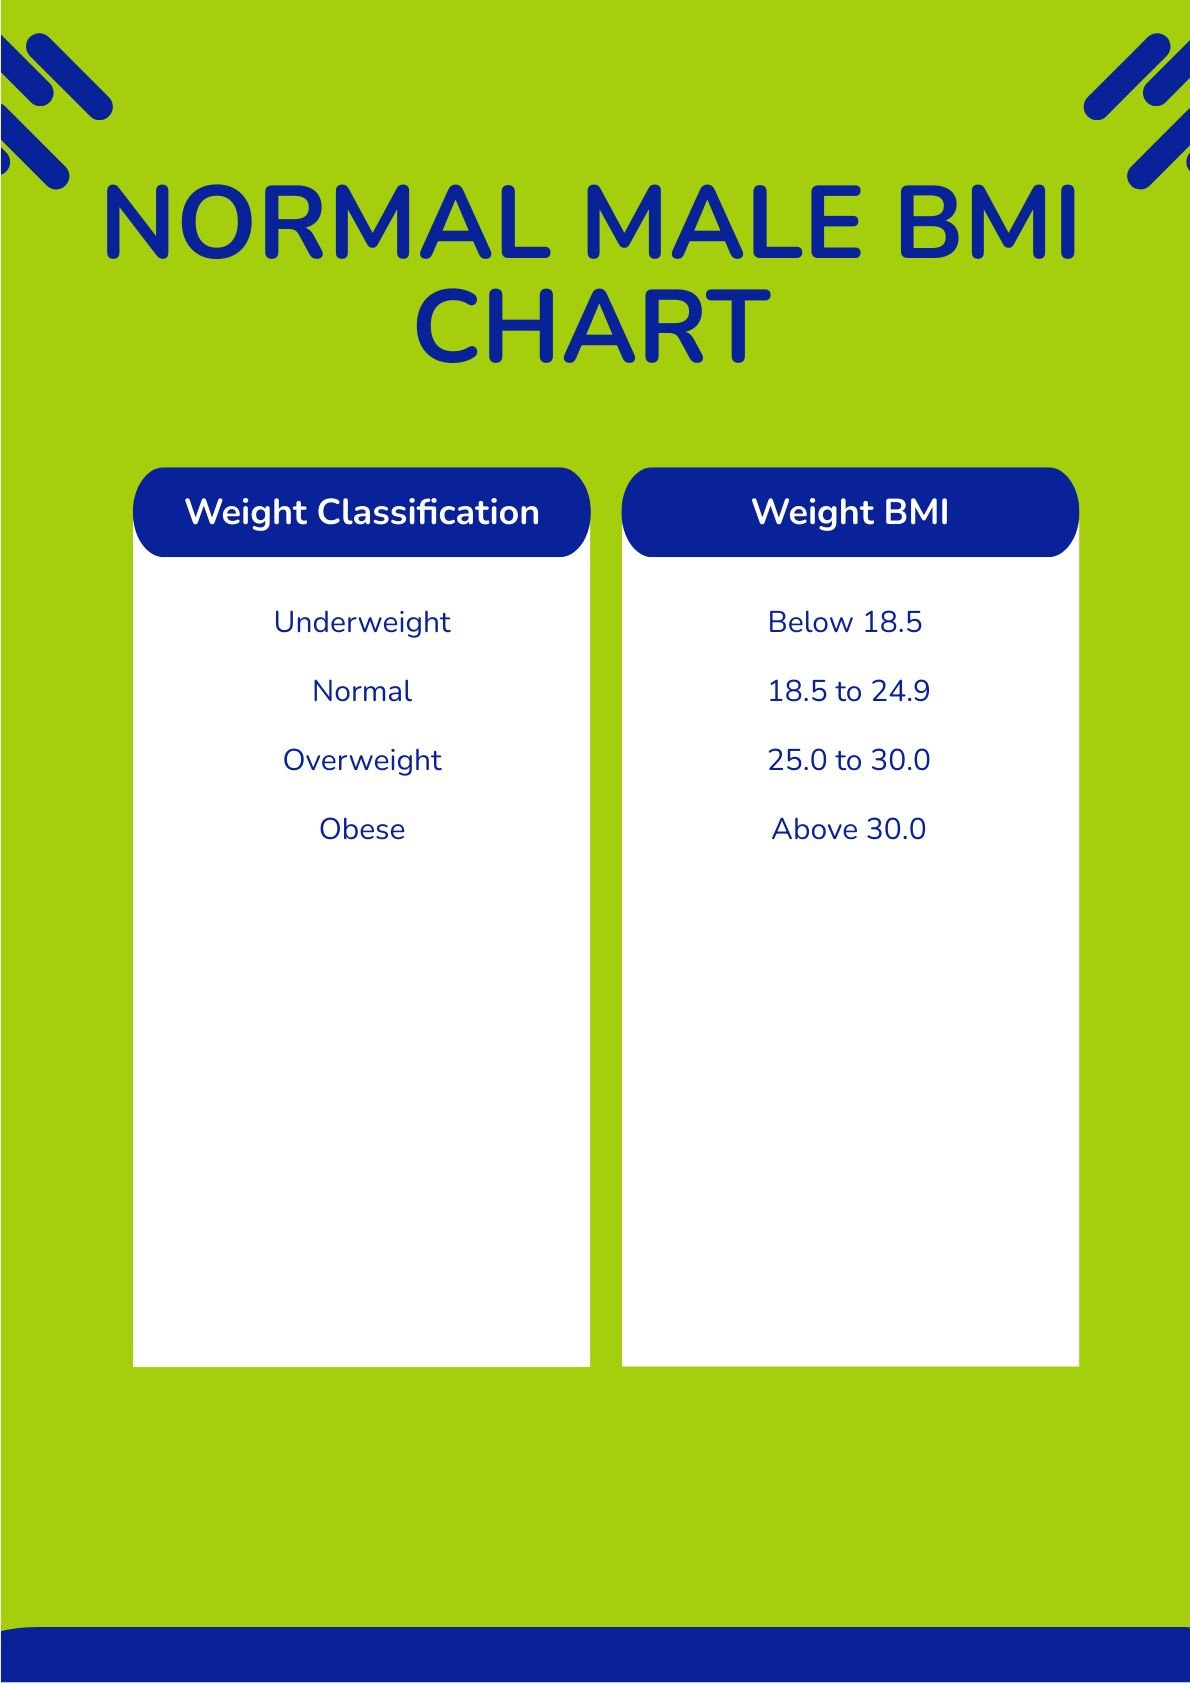 Normal Male BMI Chart in PDF, Illustrator